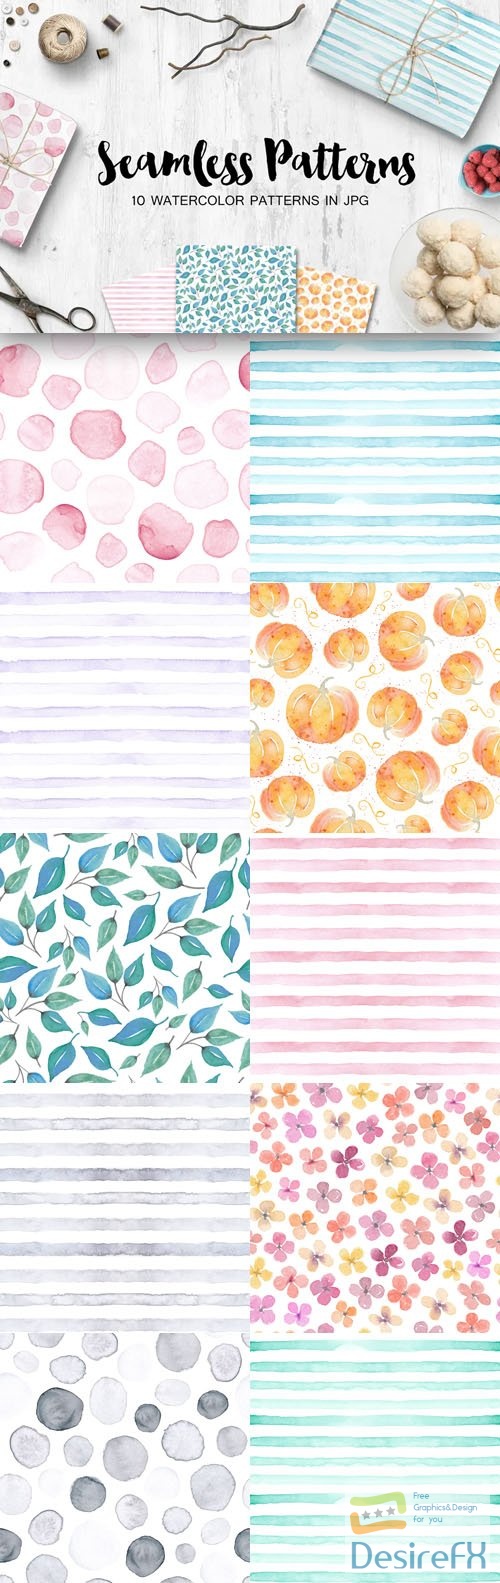 Seamless Patterns - 10 Watercolor Patterns